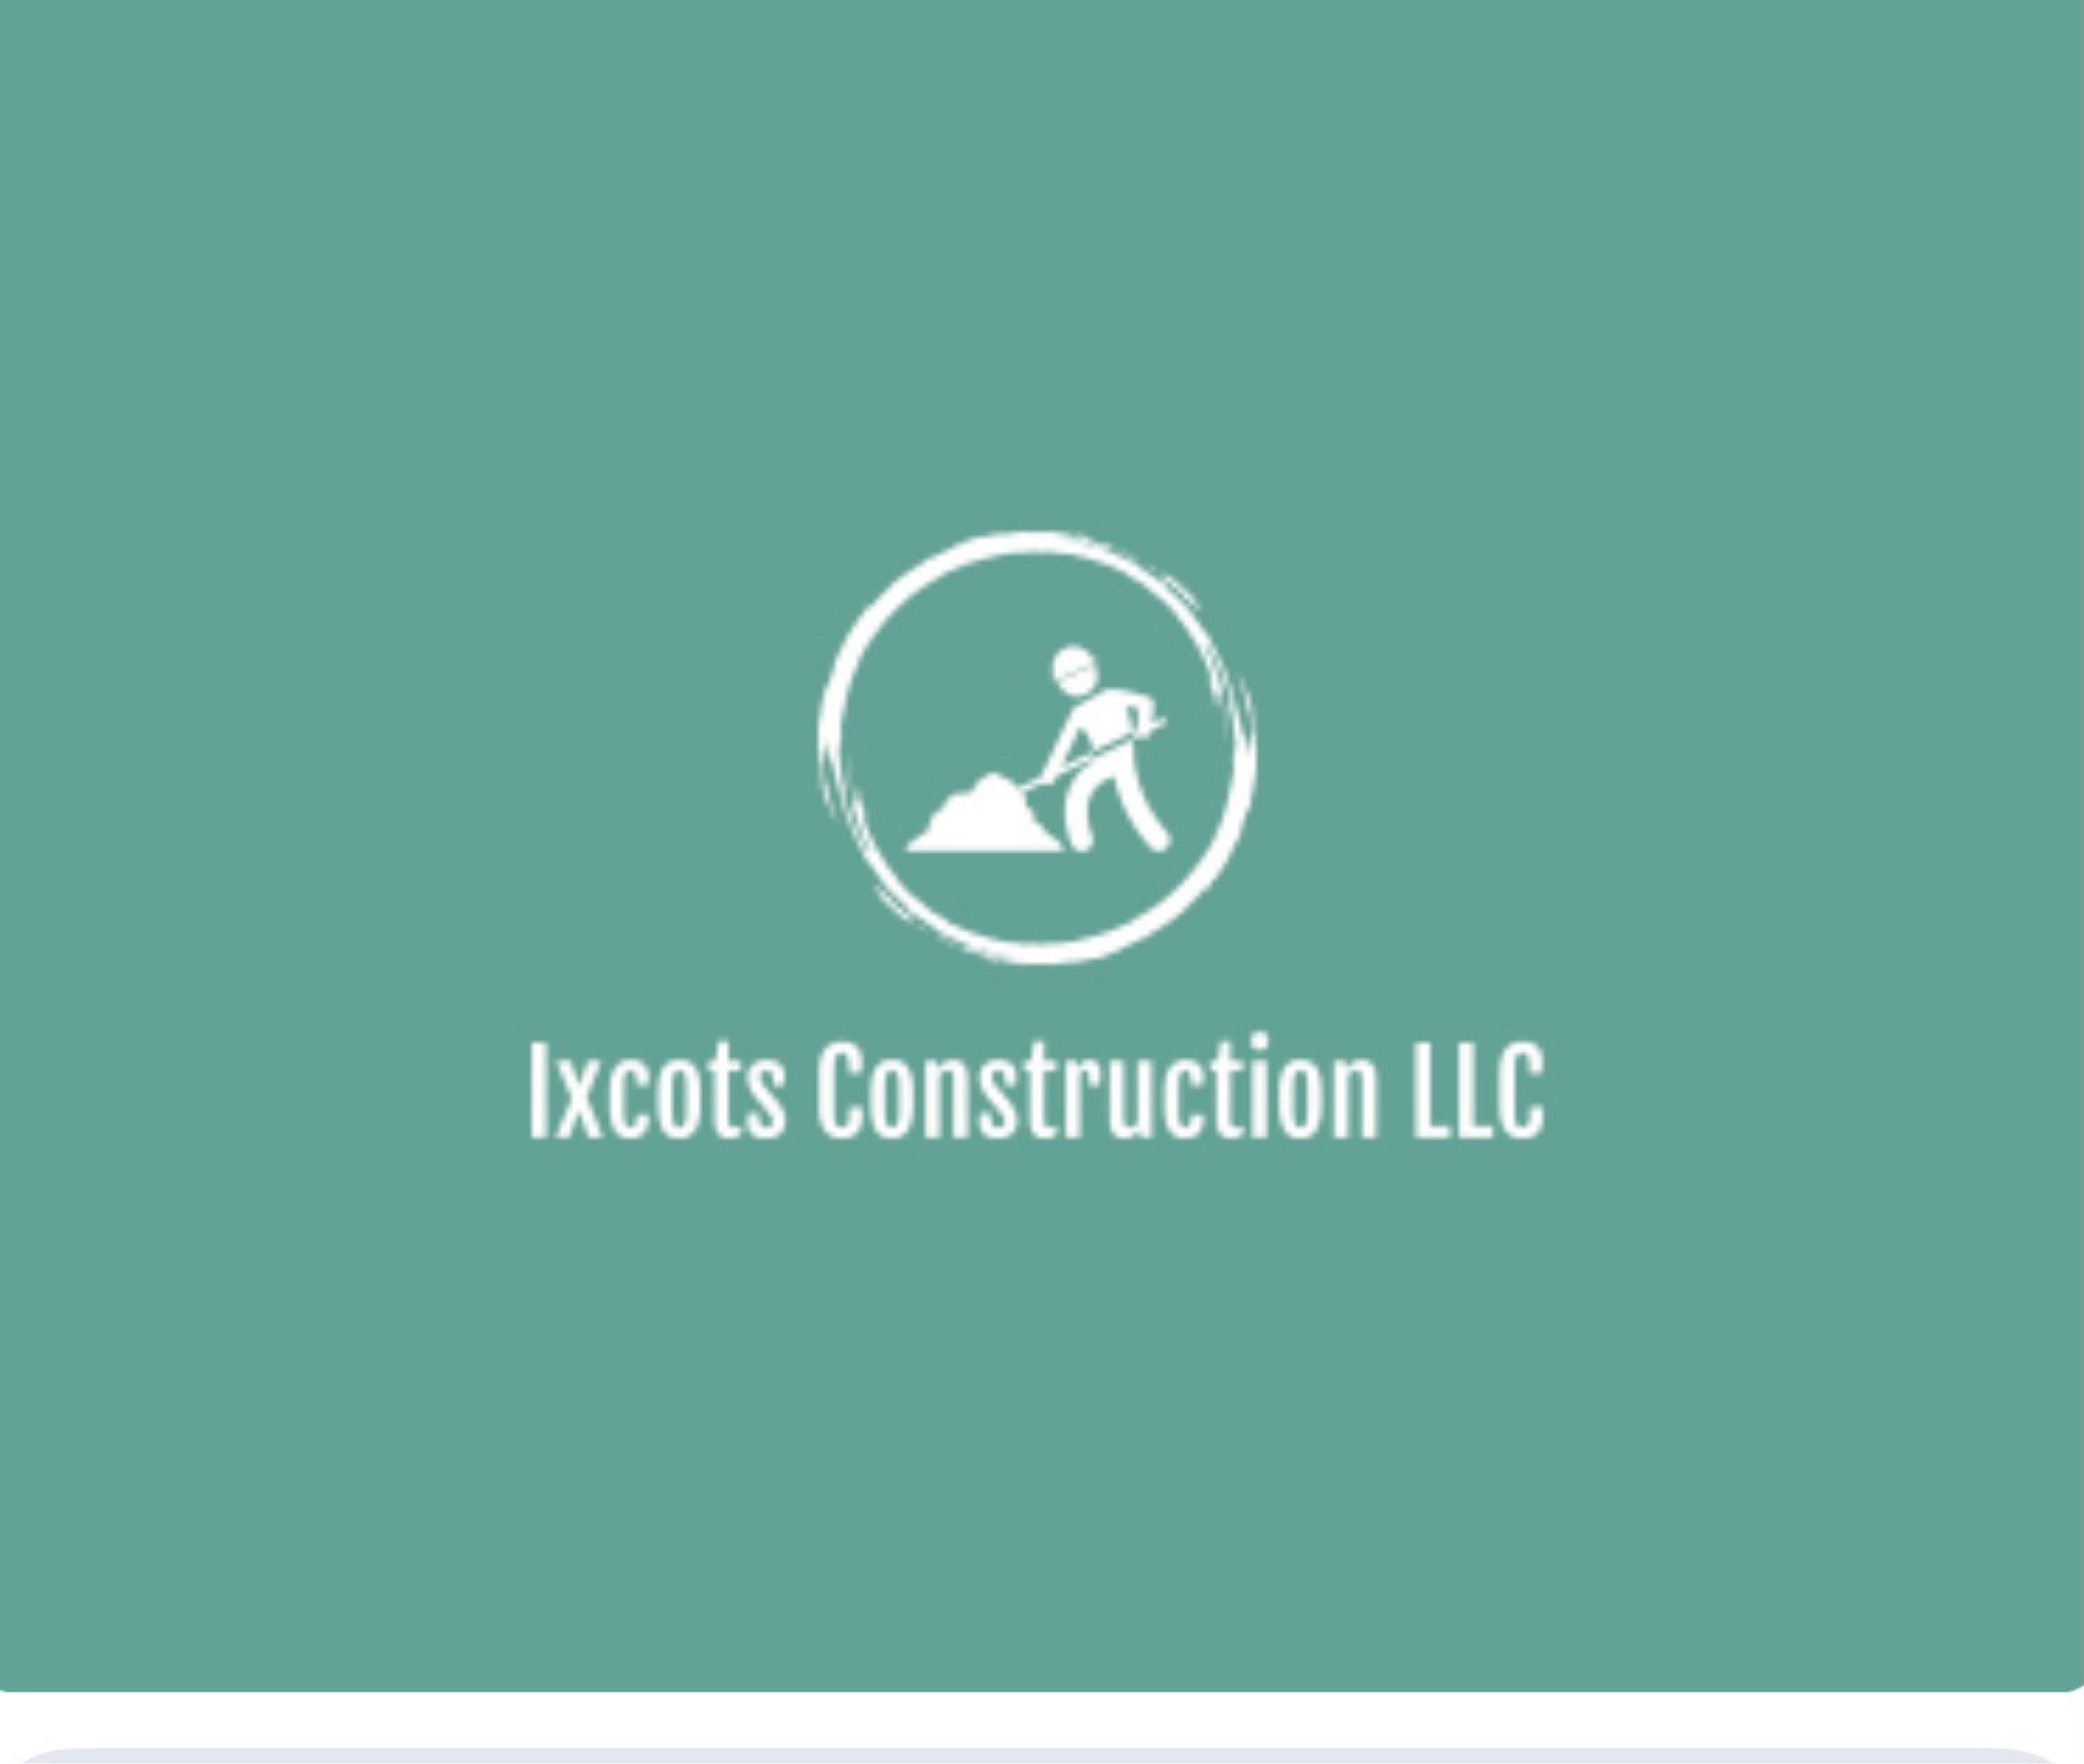 Ixcot's Construction, LLC Logo